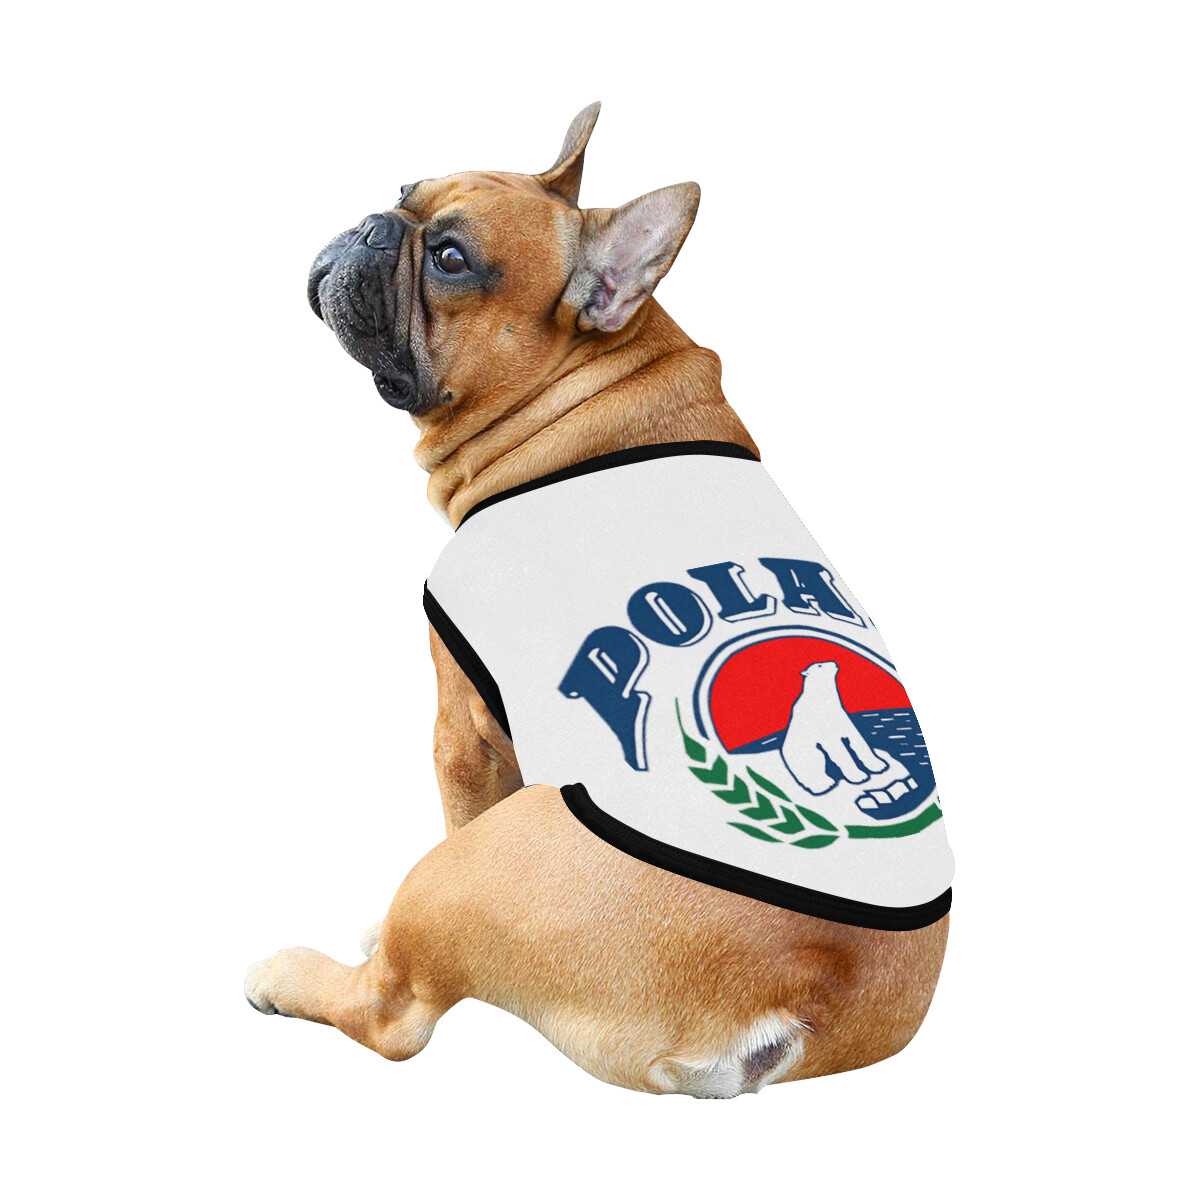 🐕🇻🇪 Oso Polar Cerveza Venezuela Vintage Dog shirt, Dog Tank Top, Dog t-shirt, Dog clothes, Gifts, front back print, 7 sizes XS to 3XL, dog gifts